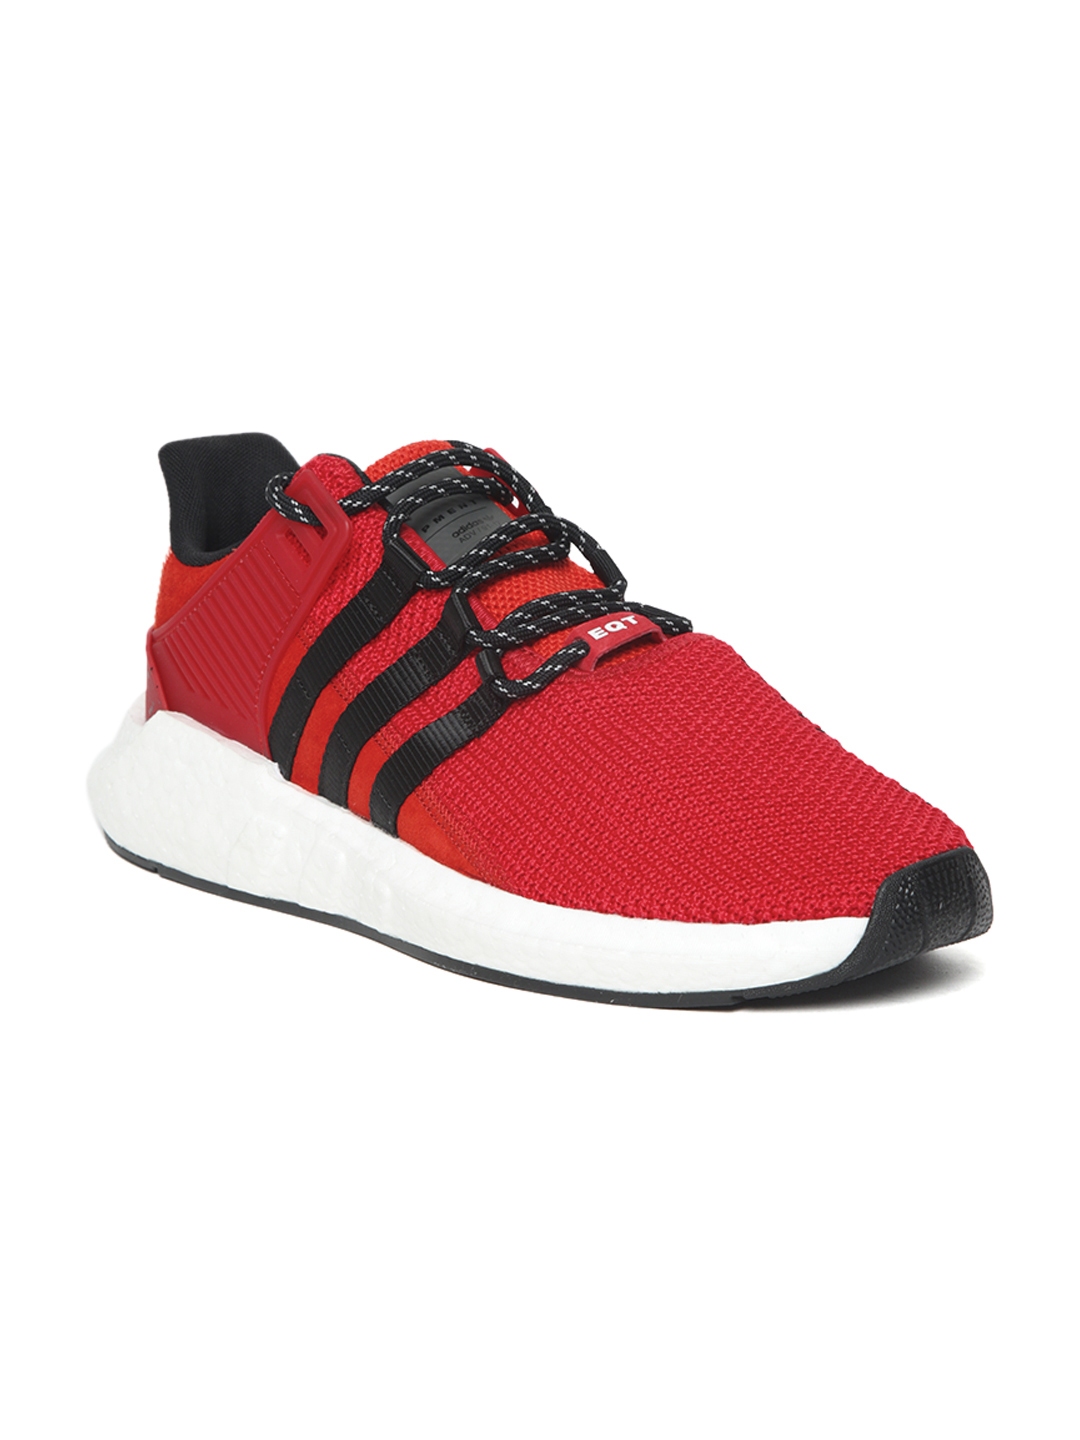 Buy ADIDAS Originals Men Red EQT Support 93/17 Woven Design Sneakers ...